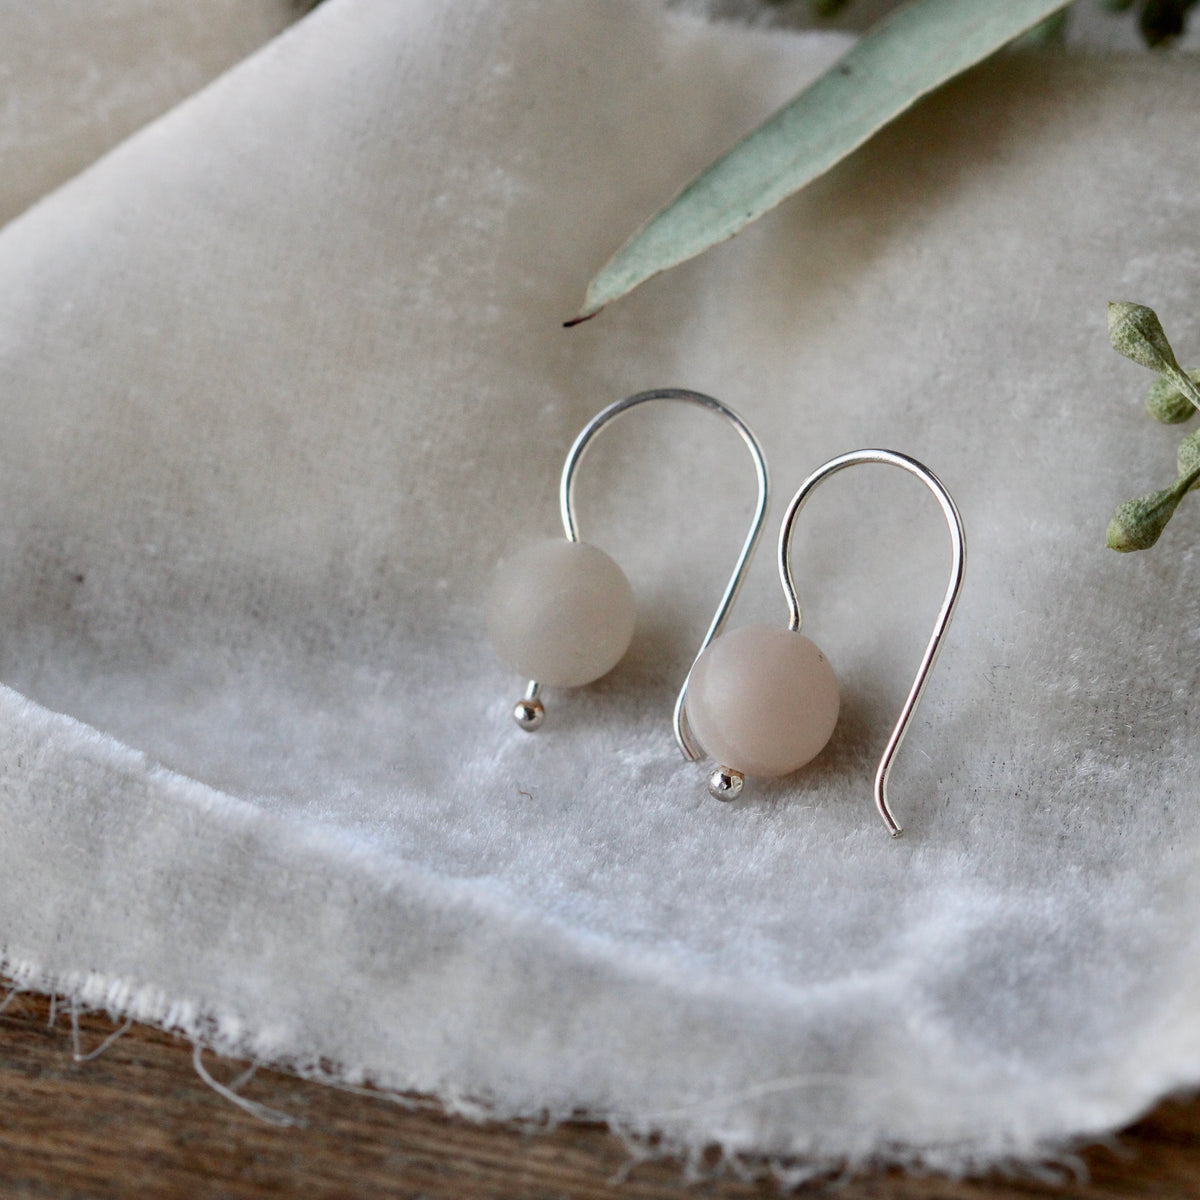 Clearance Sale little gemstone earrings  white peachy Agate